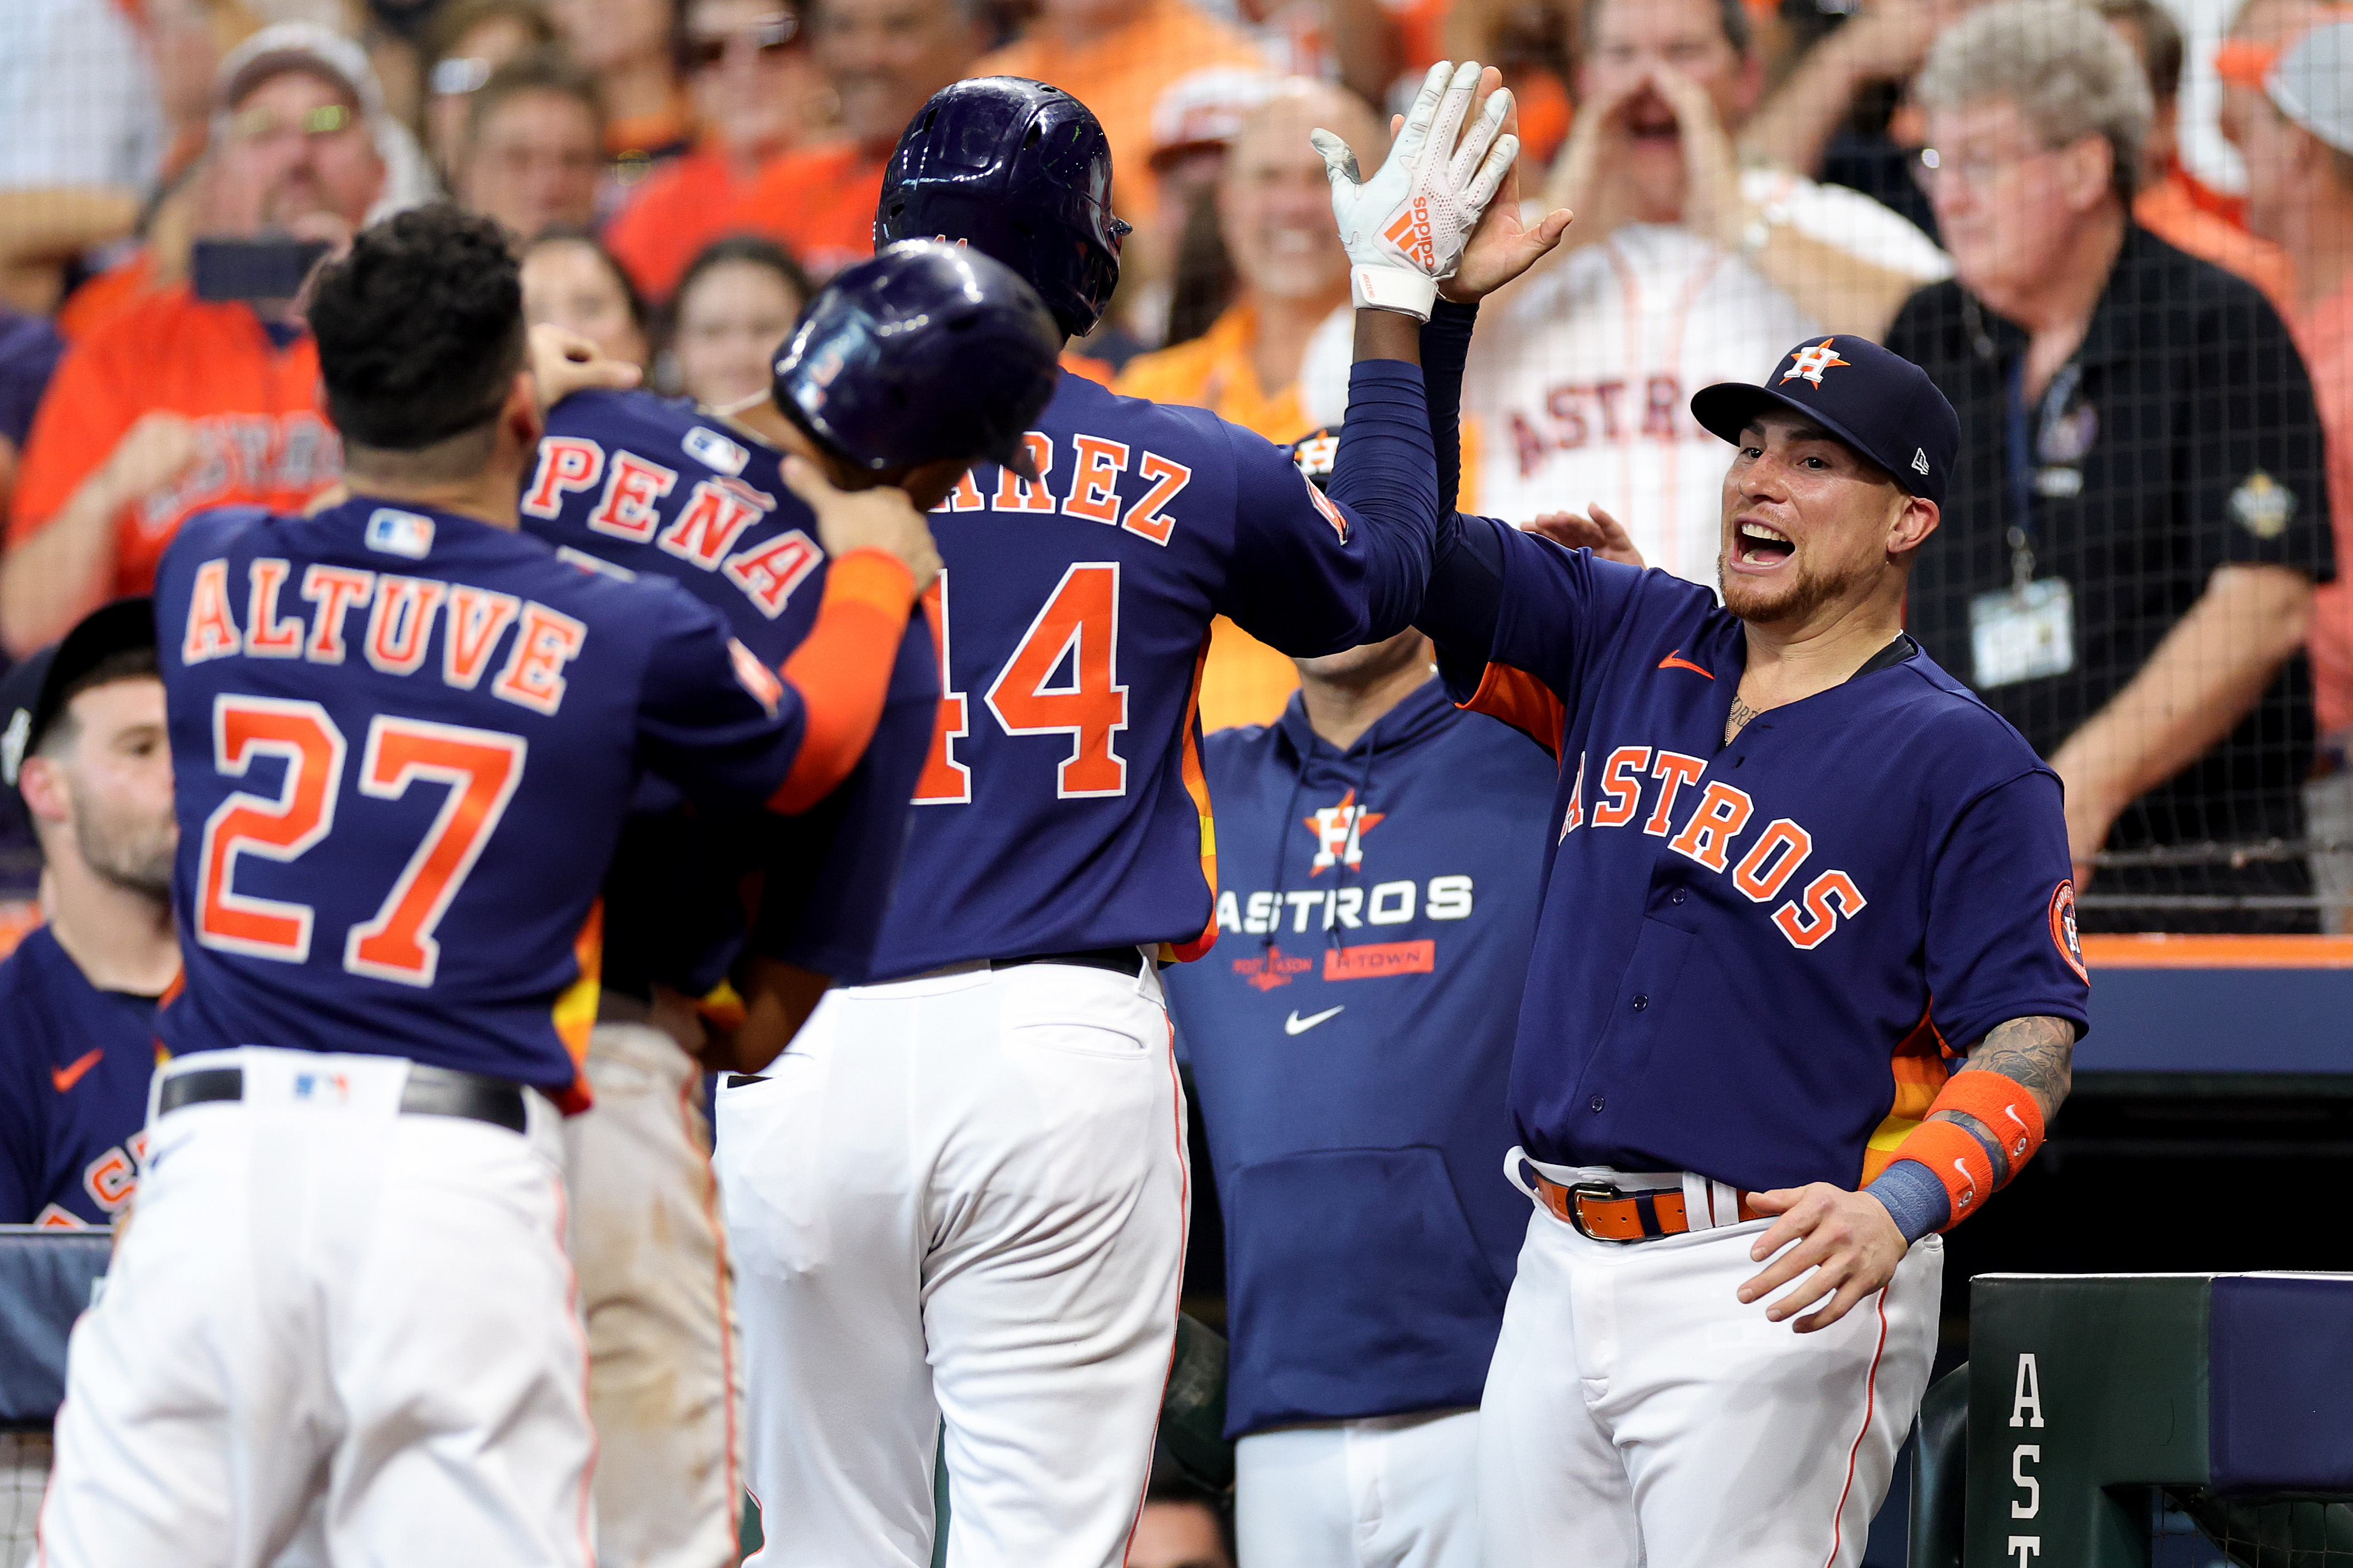 MLB playoffs: Yordan Alvarez's 9th-inning HR lifts Astros over Mariners